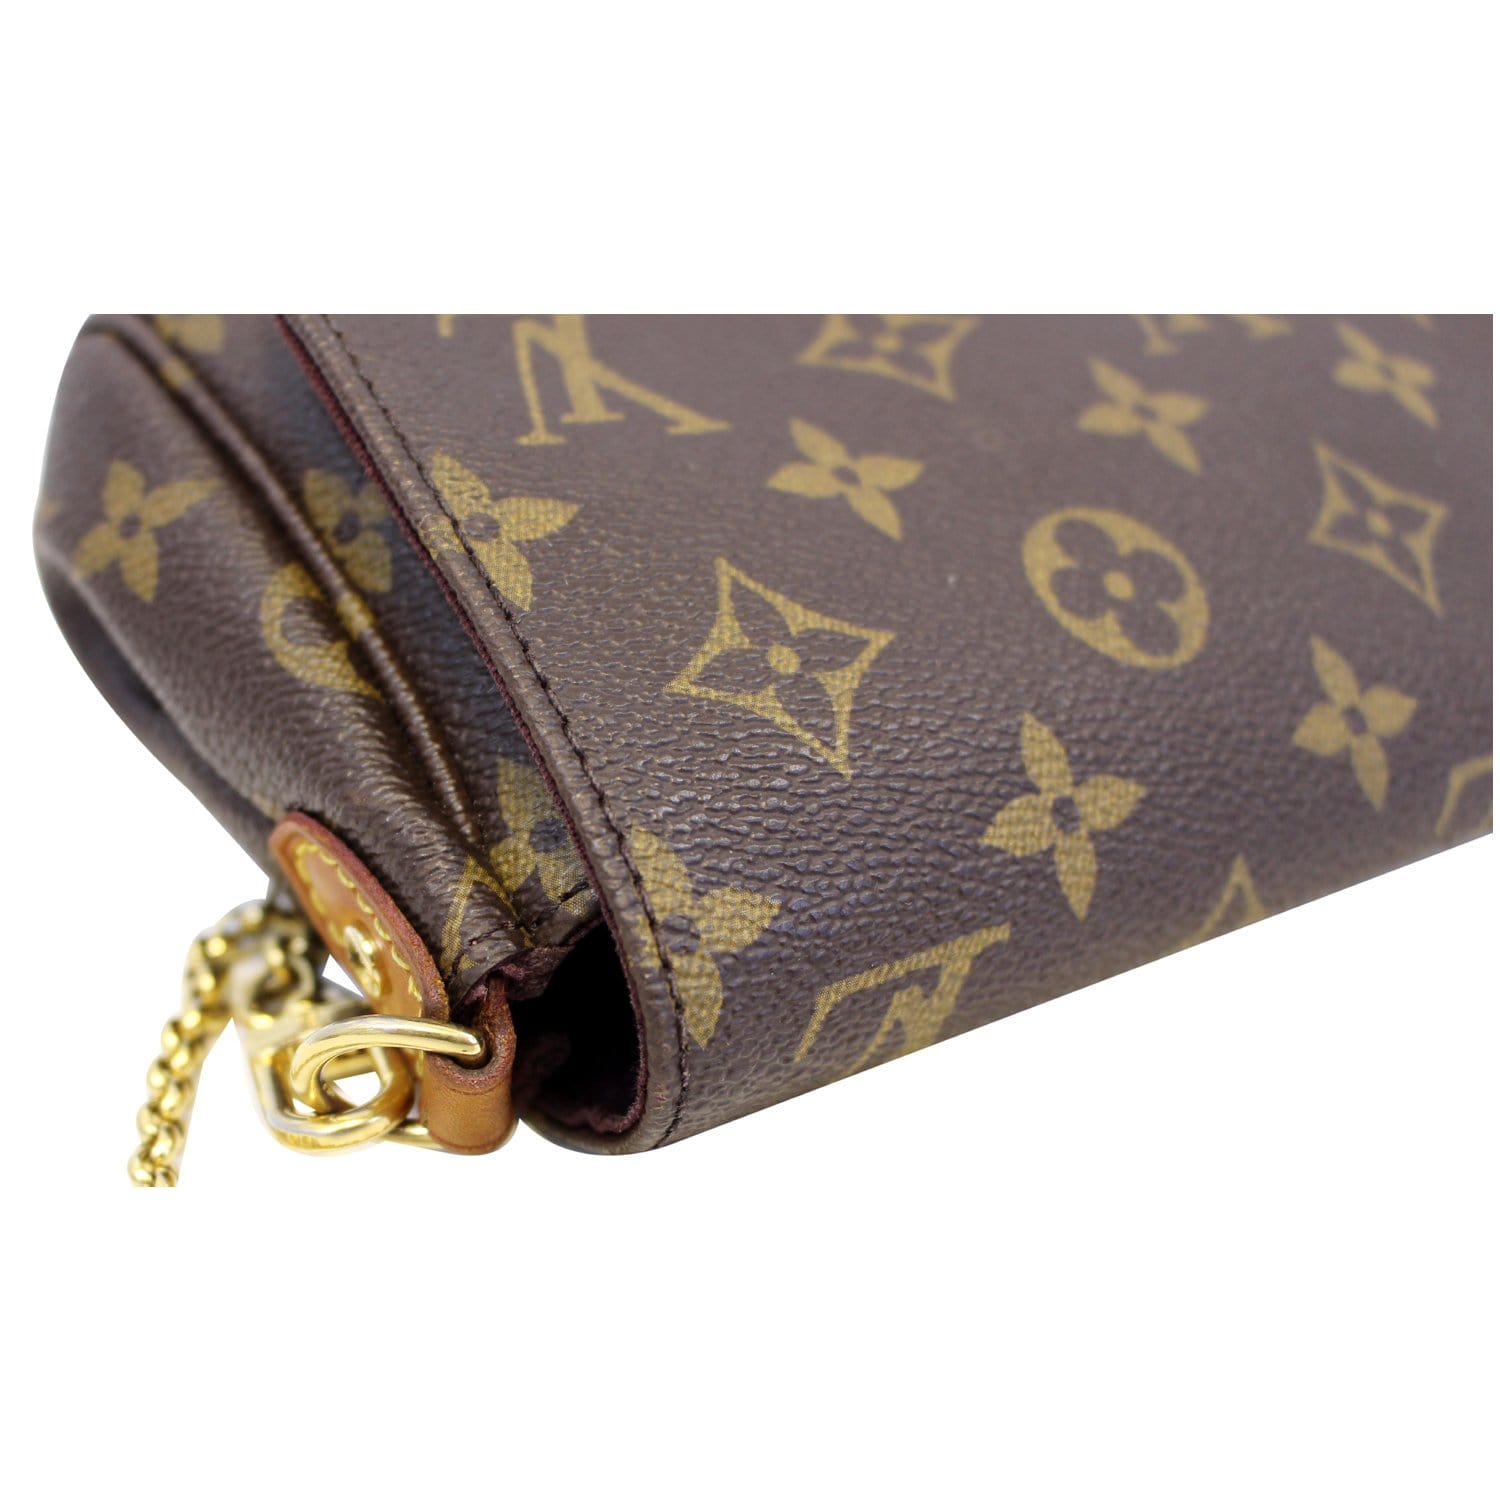 Brandville - The bag everybody LOVES‼️ Louis Vuitton Favorite PM